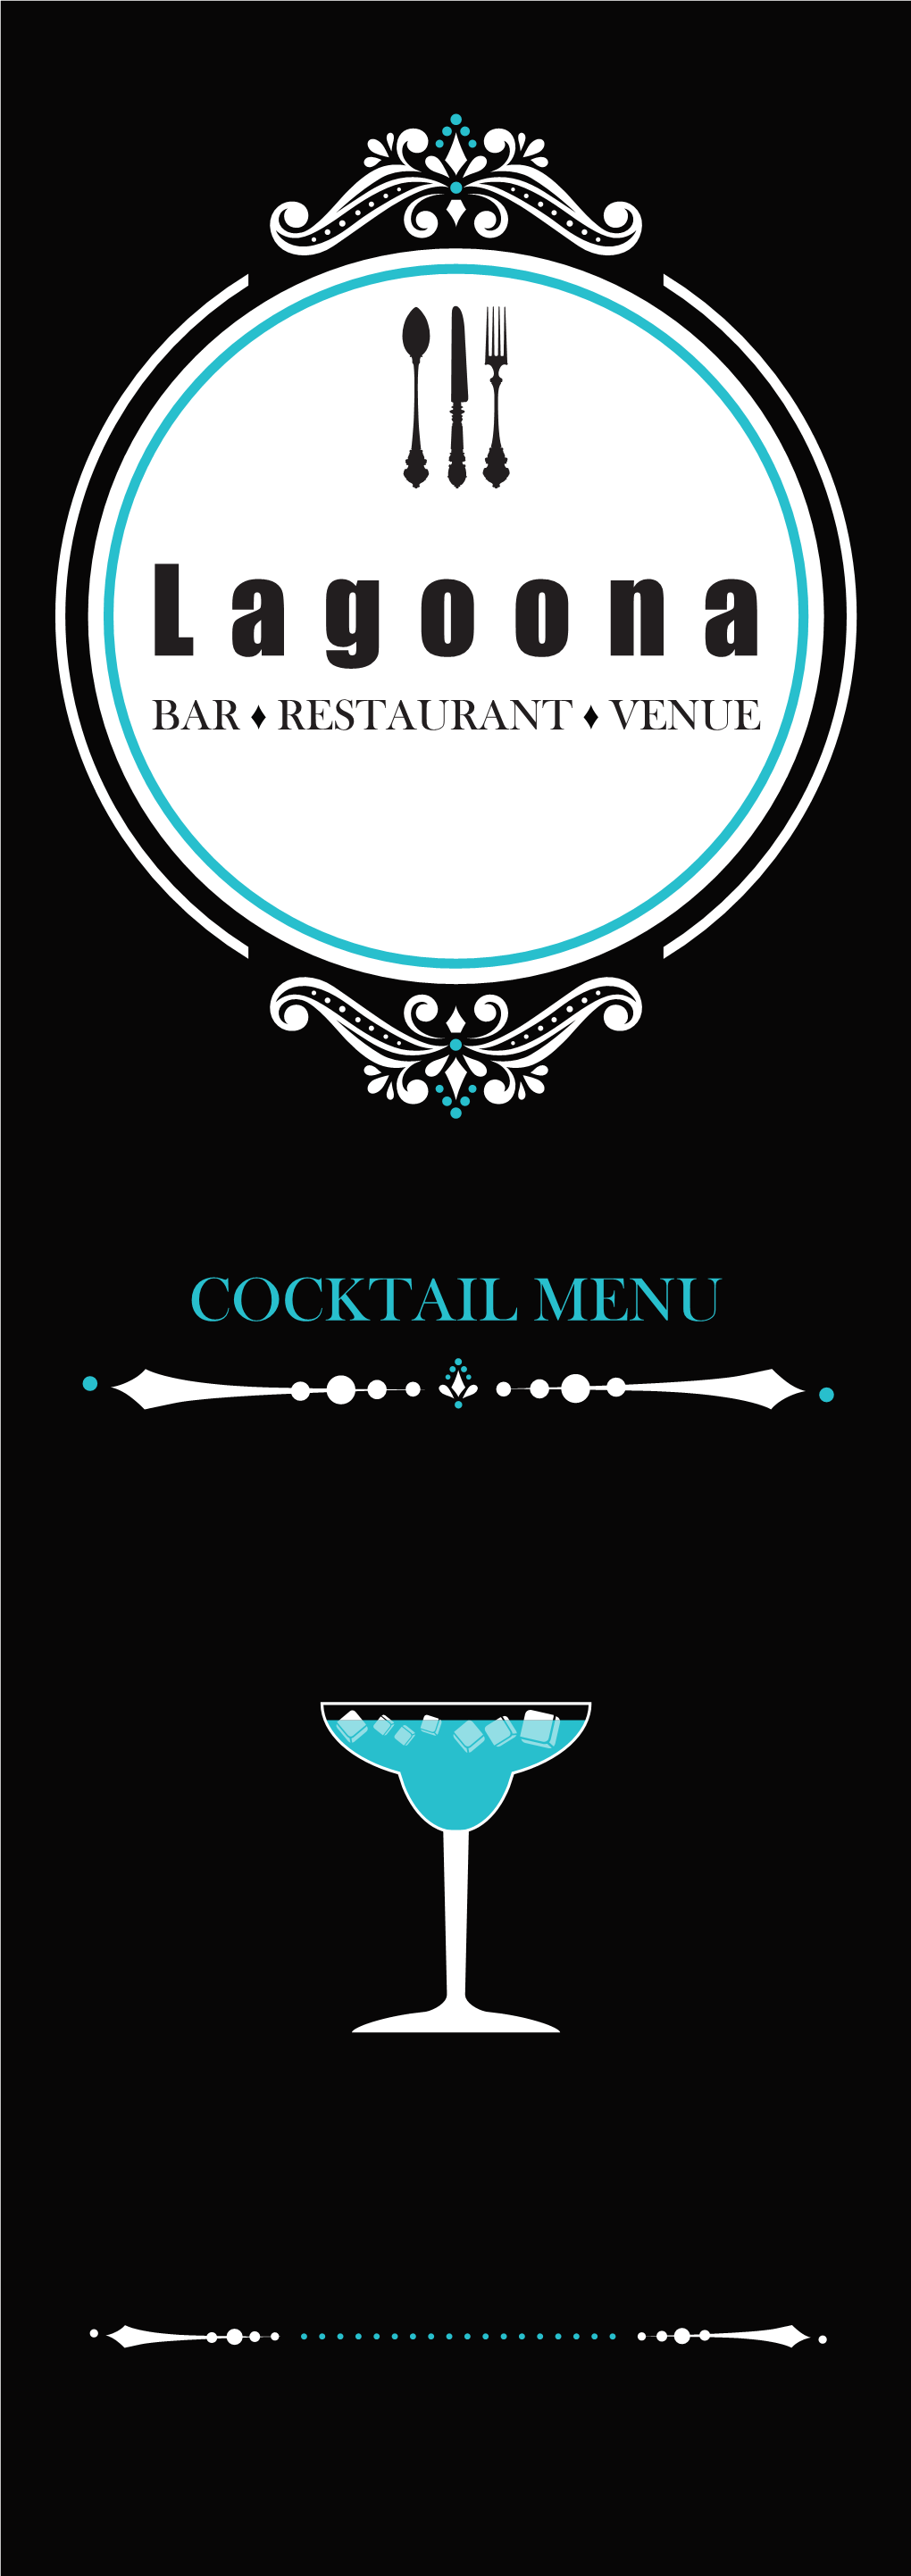 Cocktail Menu Cocktail Menu